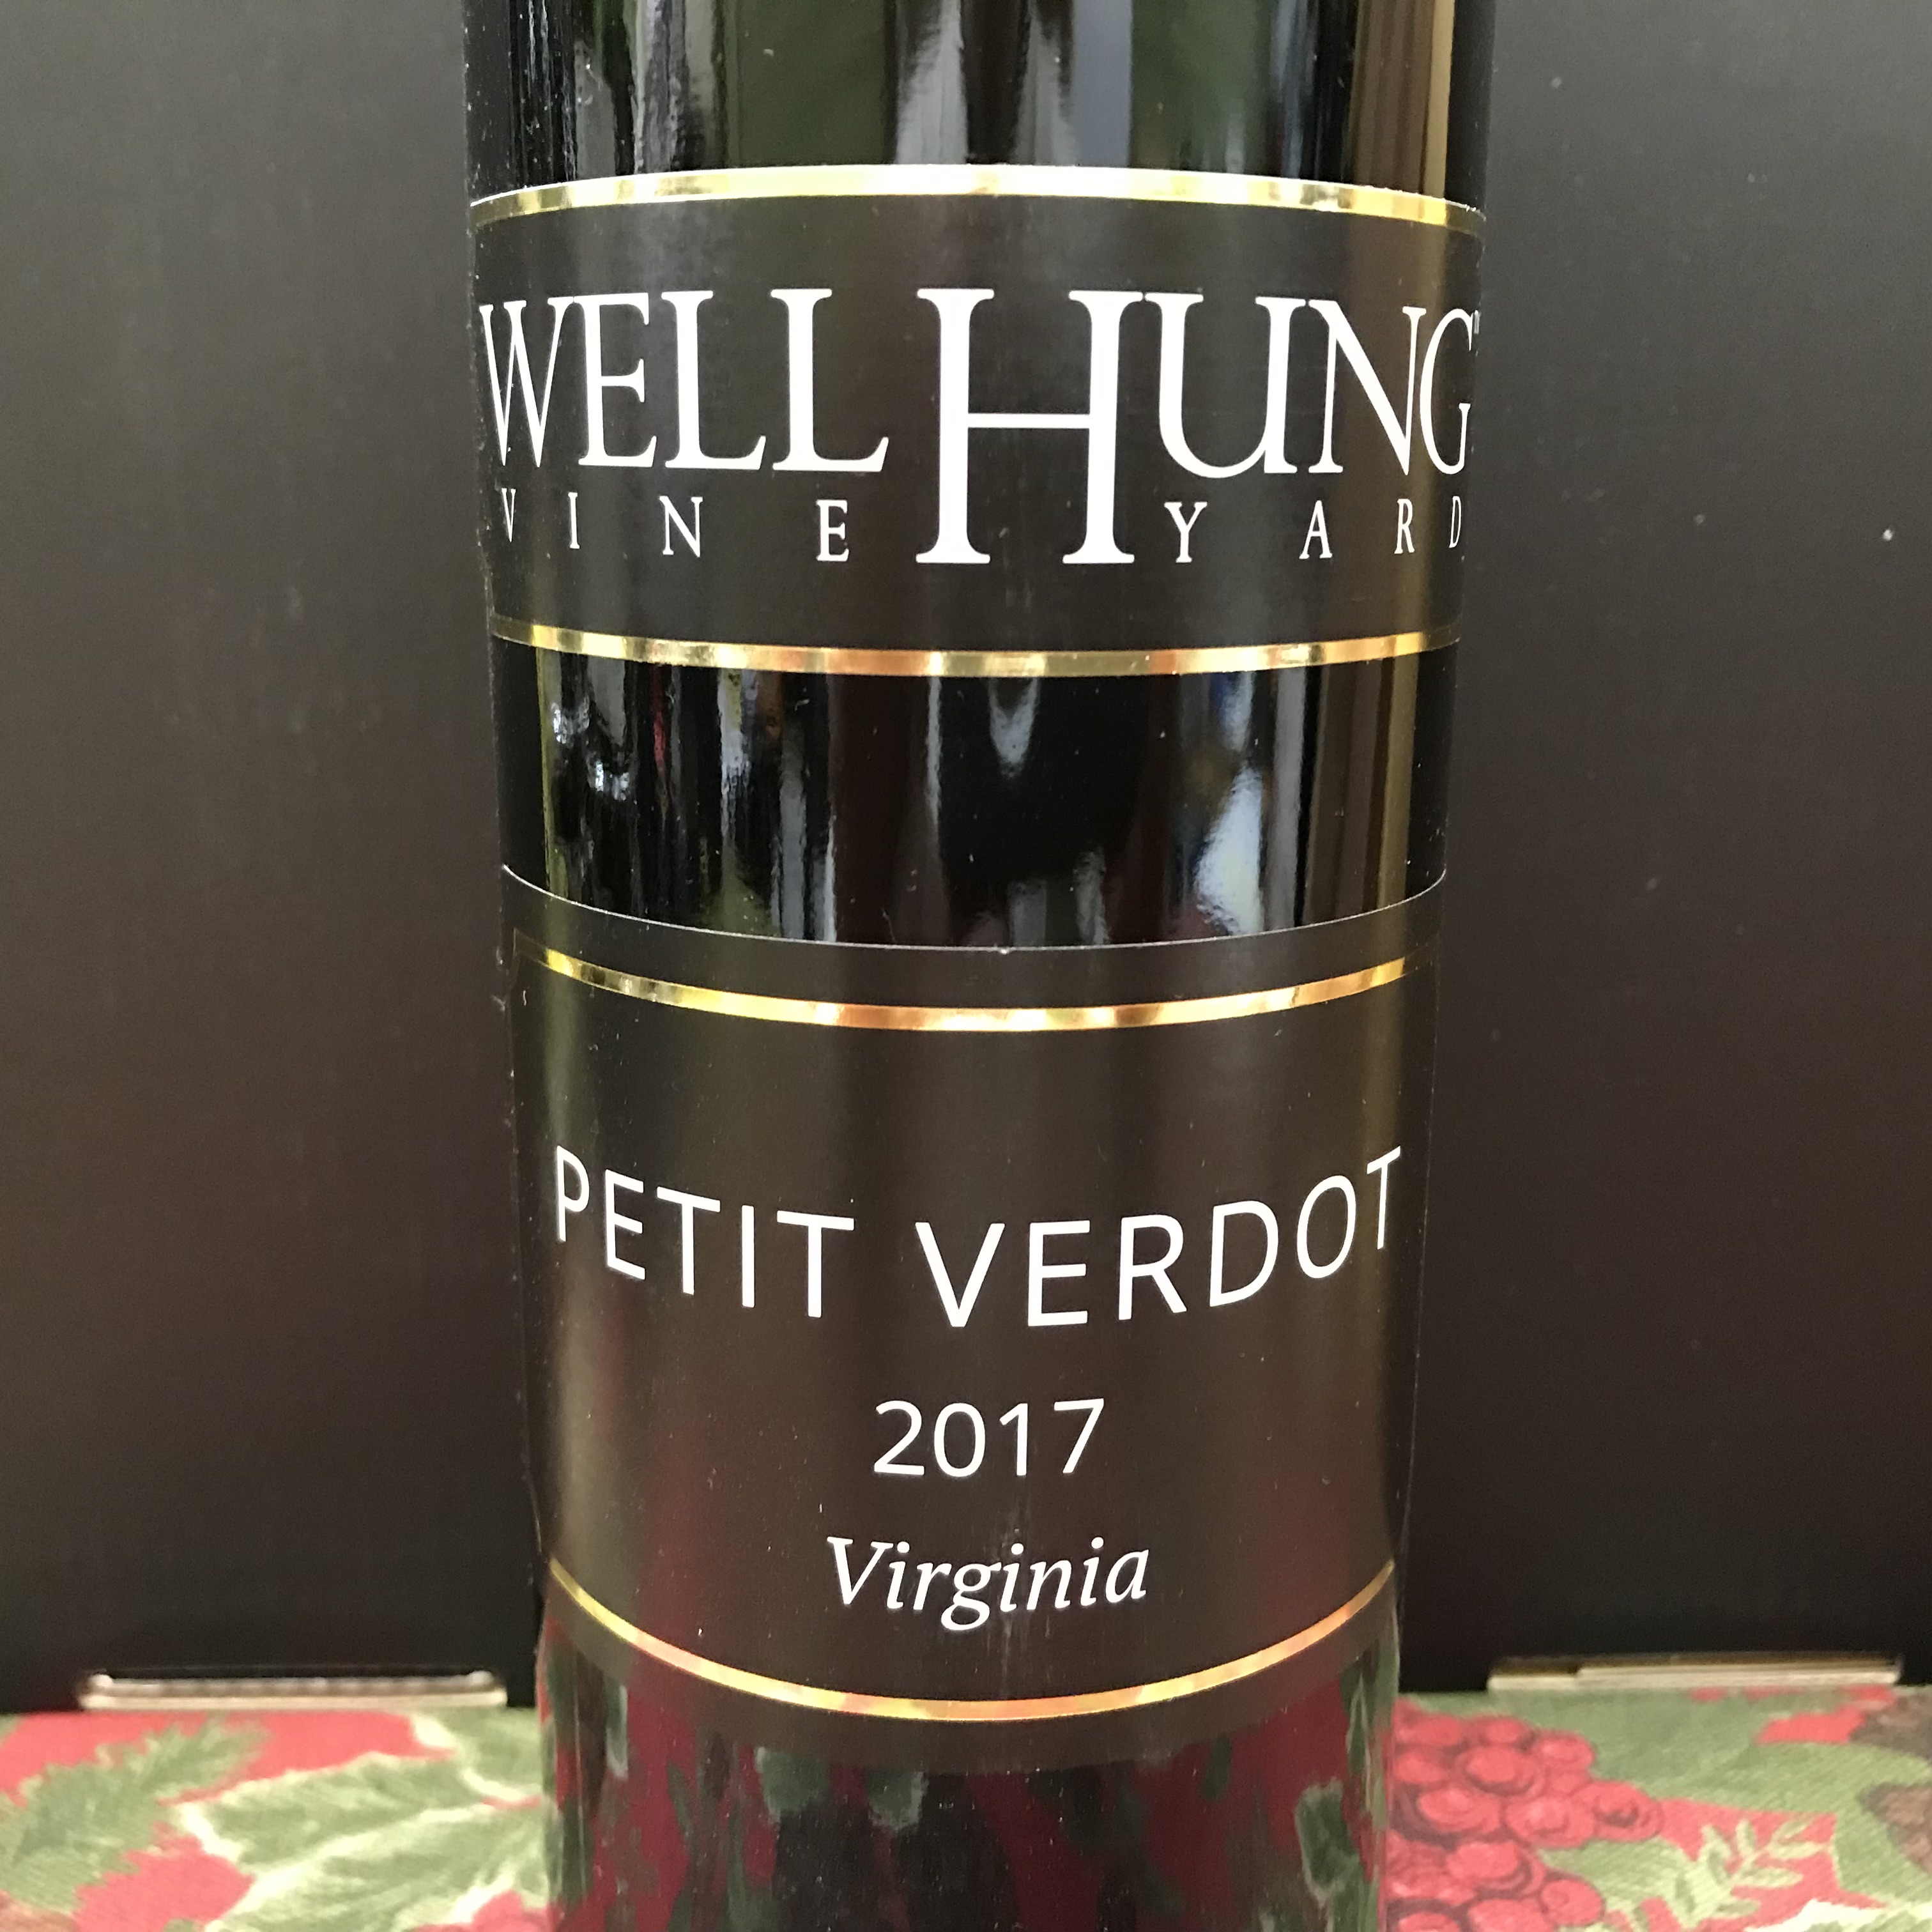 Well Hung Vineyard Petit Verdot Virginia 2017